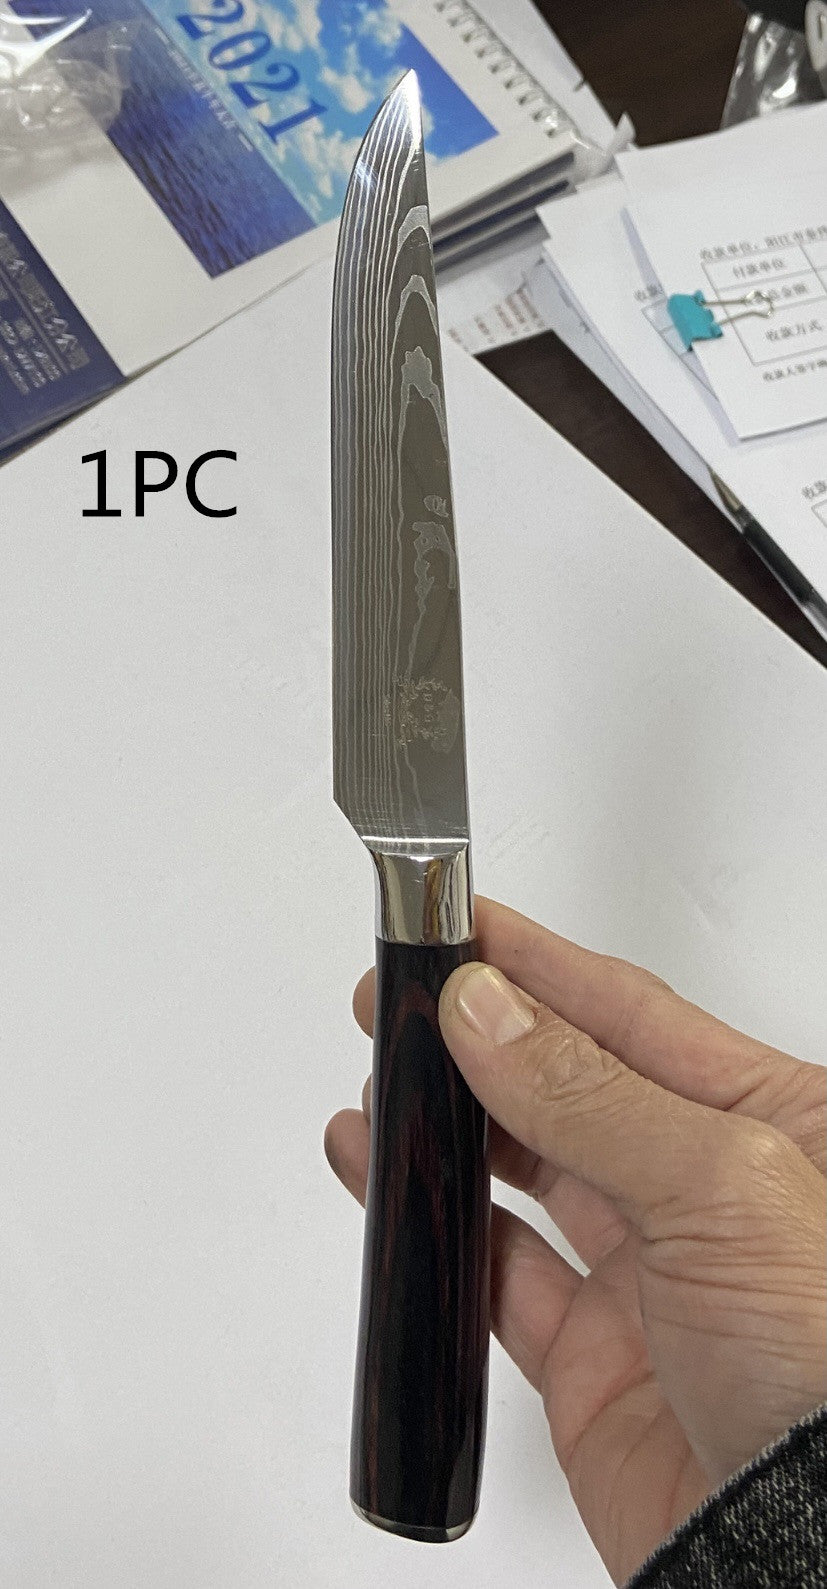 KD Knife Color Wooden Handle Steak Knife Stainless Steel Western Kitchen Knives Kitchen Fruit Knife